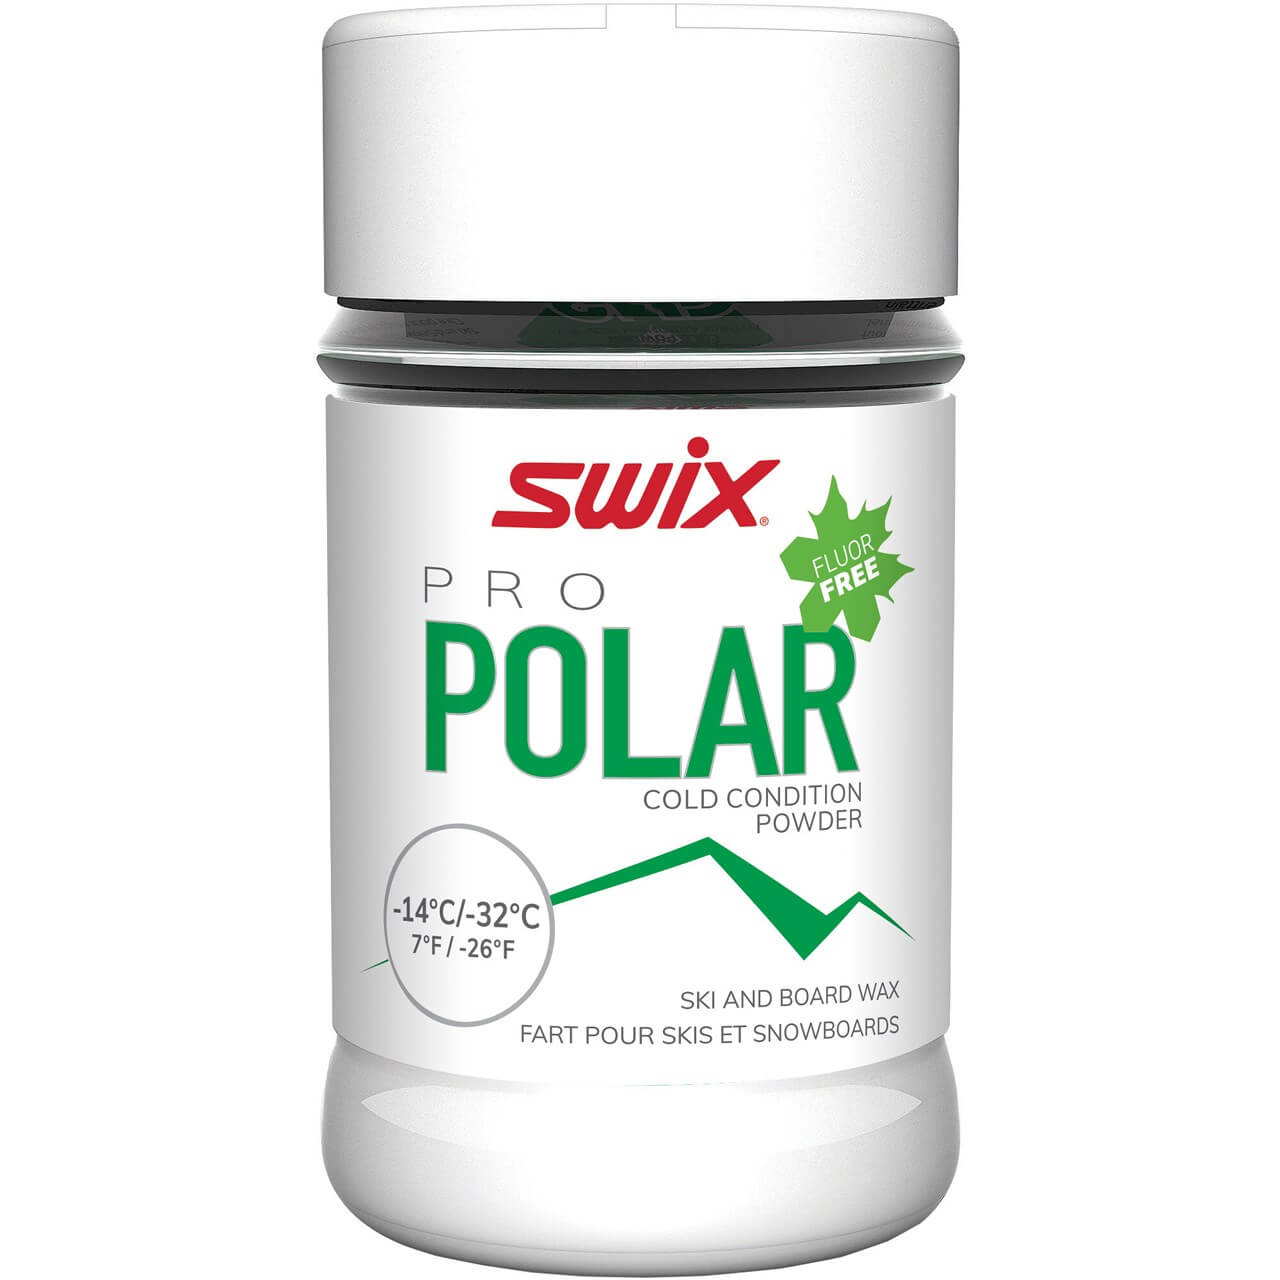 Swix PS Polar Powder 30g -14°C/-32°C